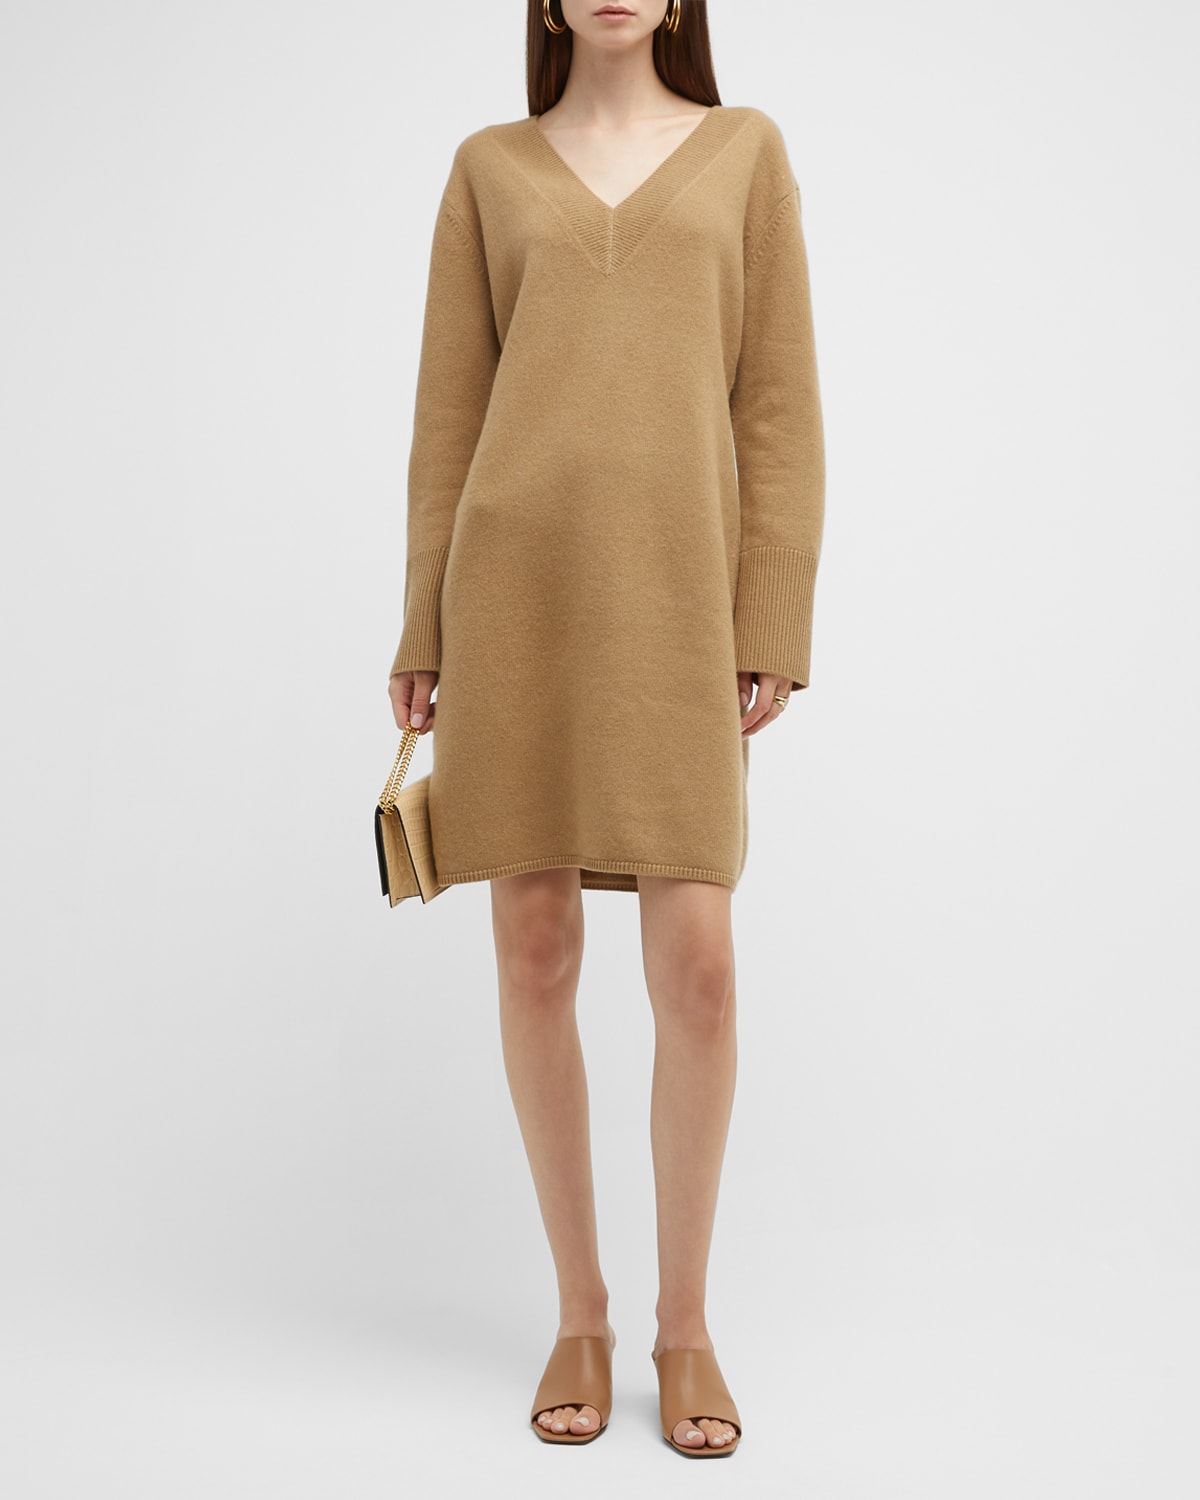 Vince Short V-Neck Wool Sweater Dress